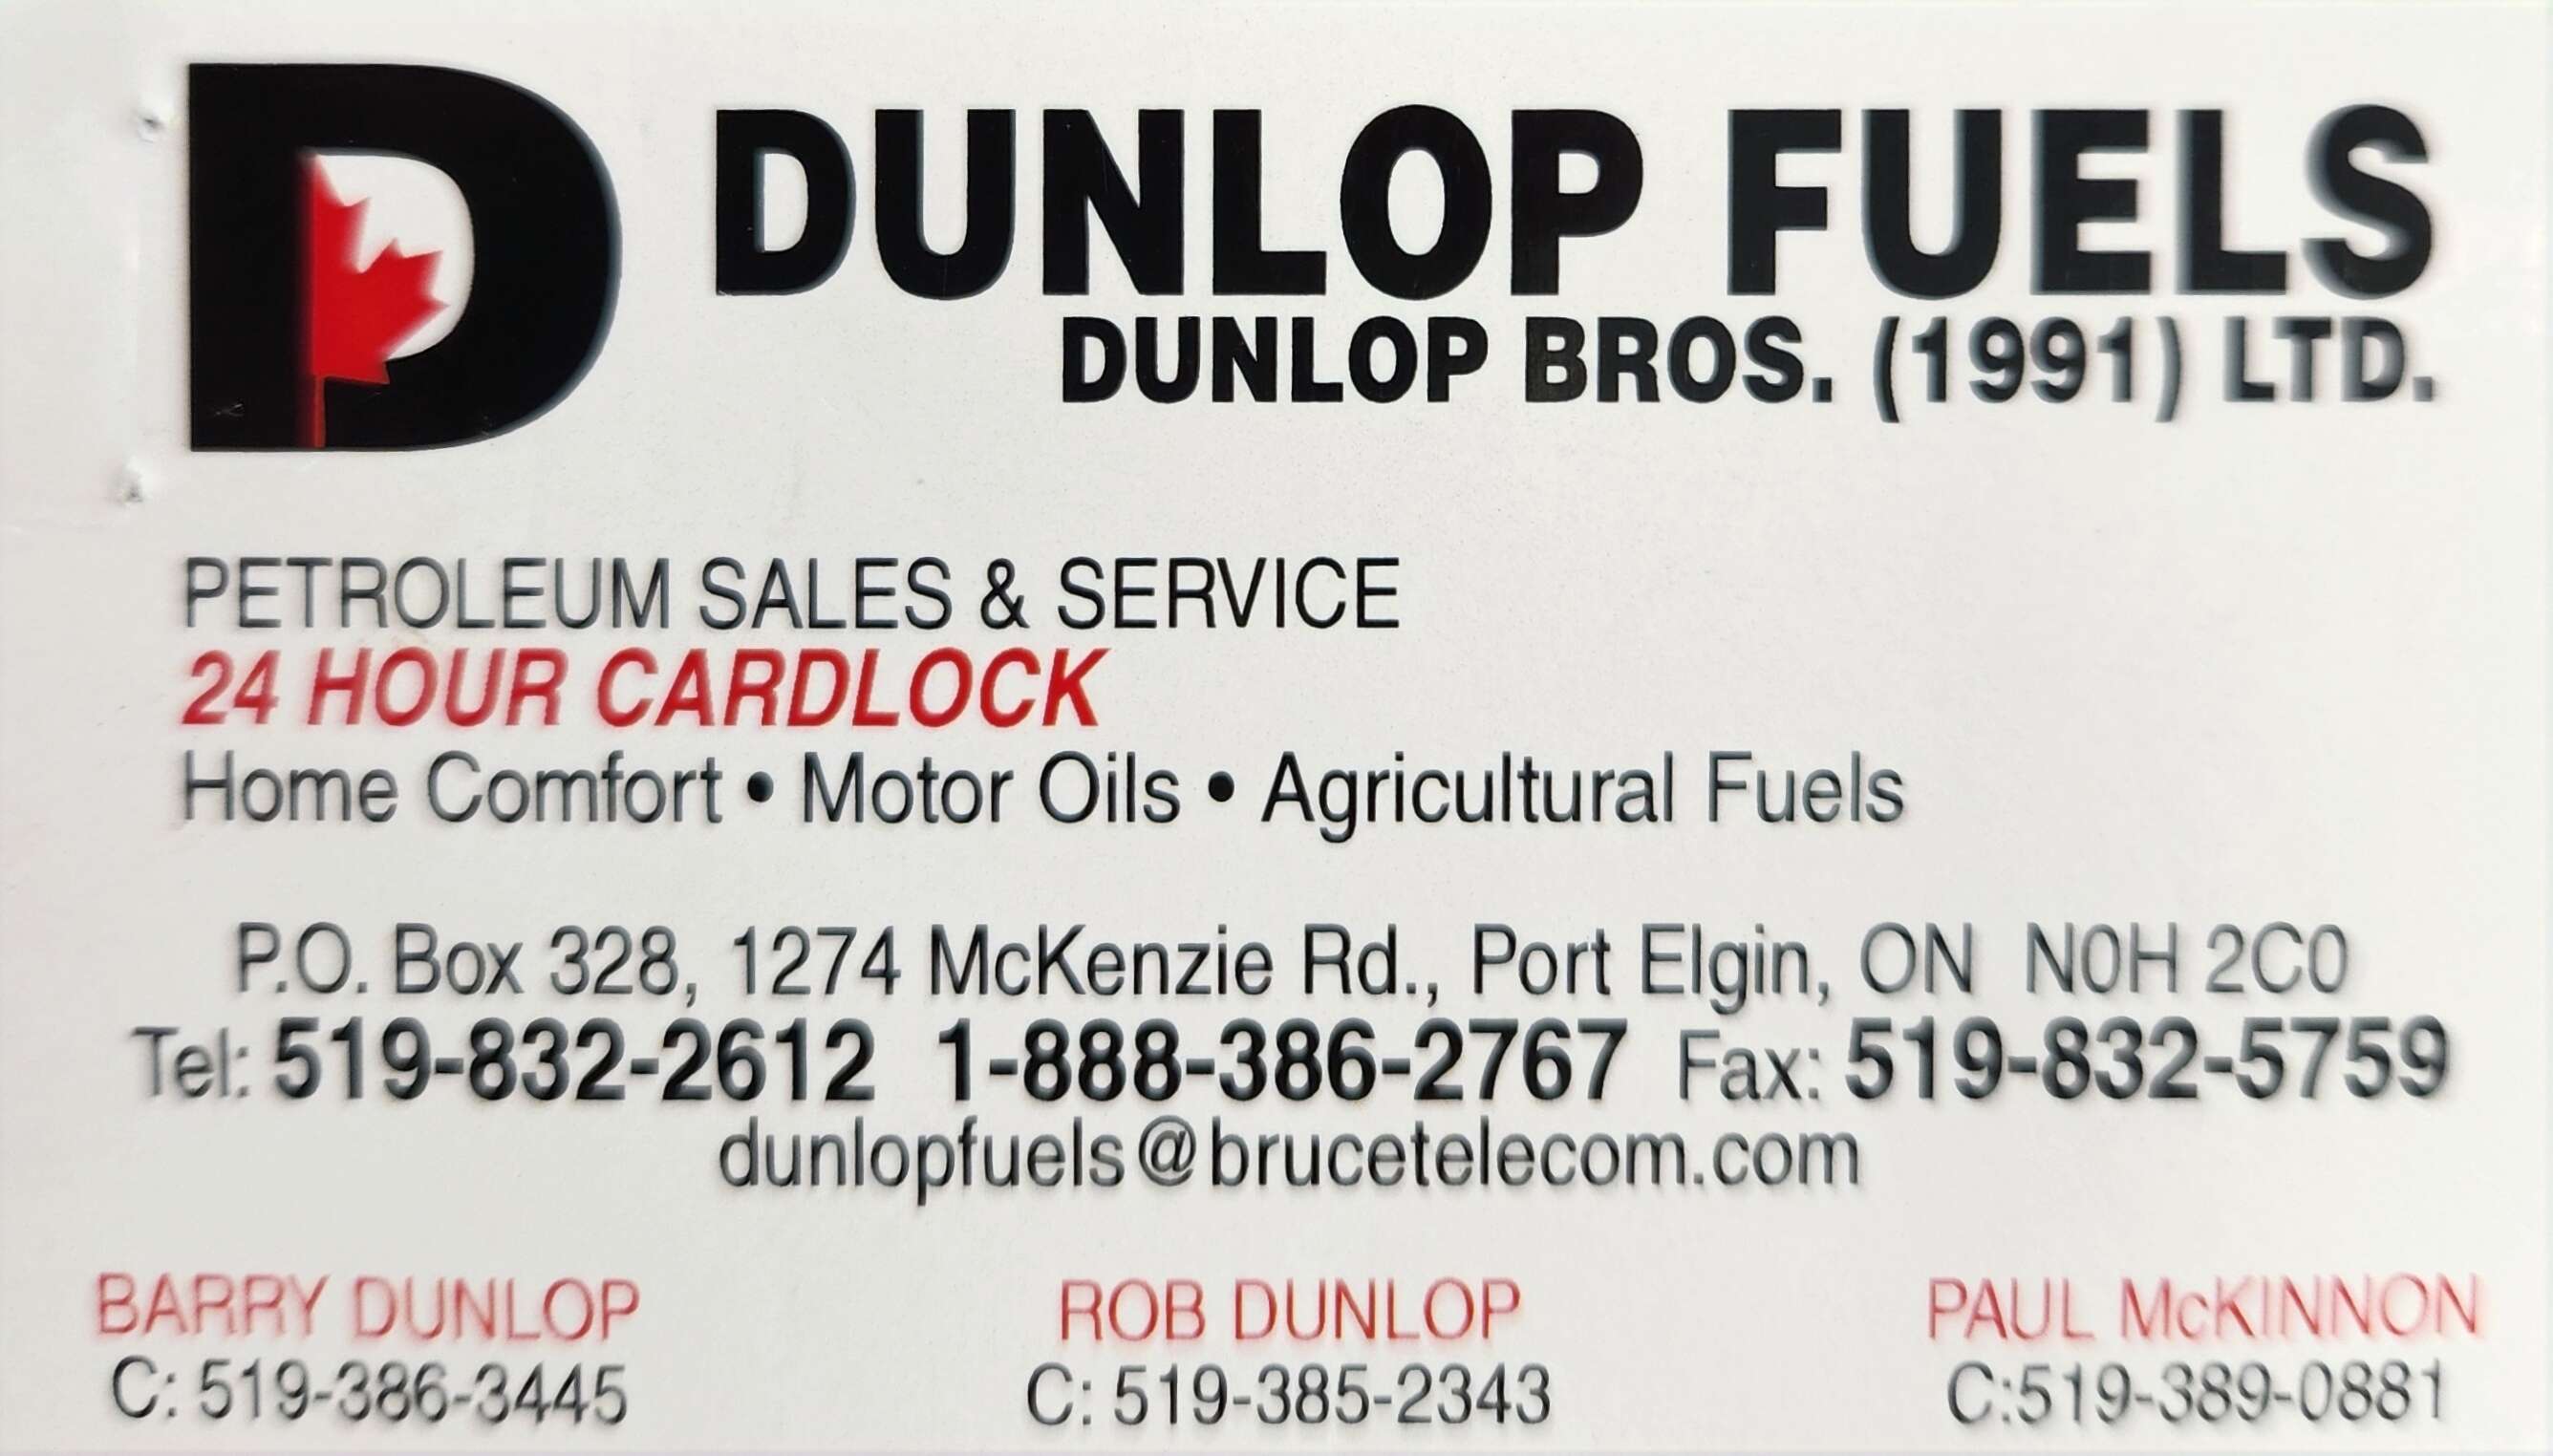 Dunlop Fuels